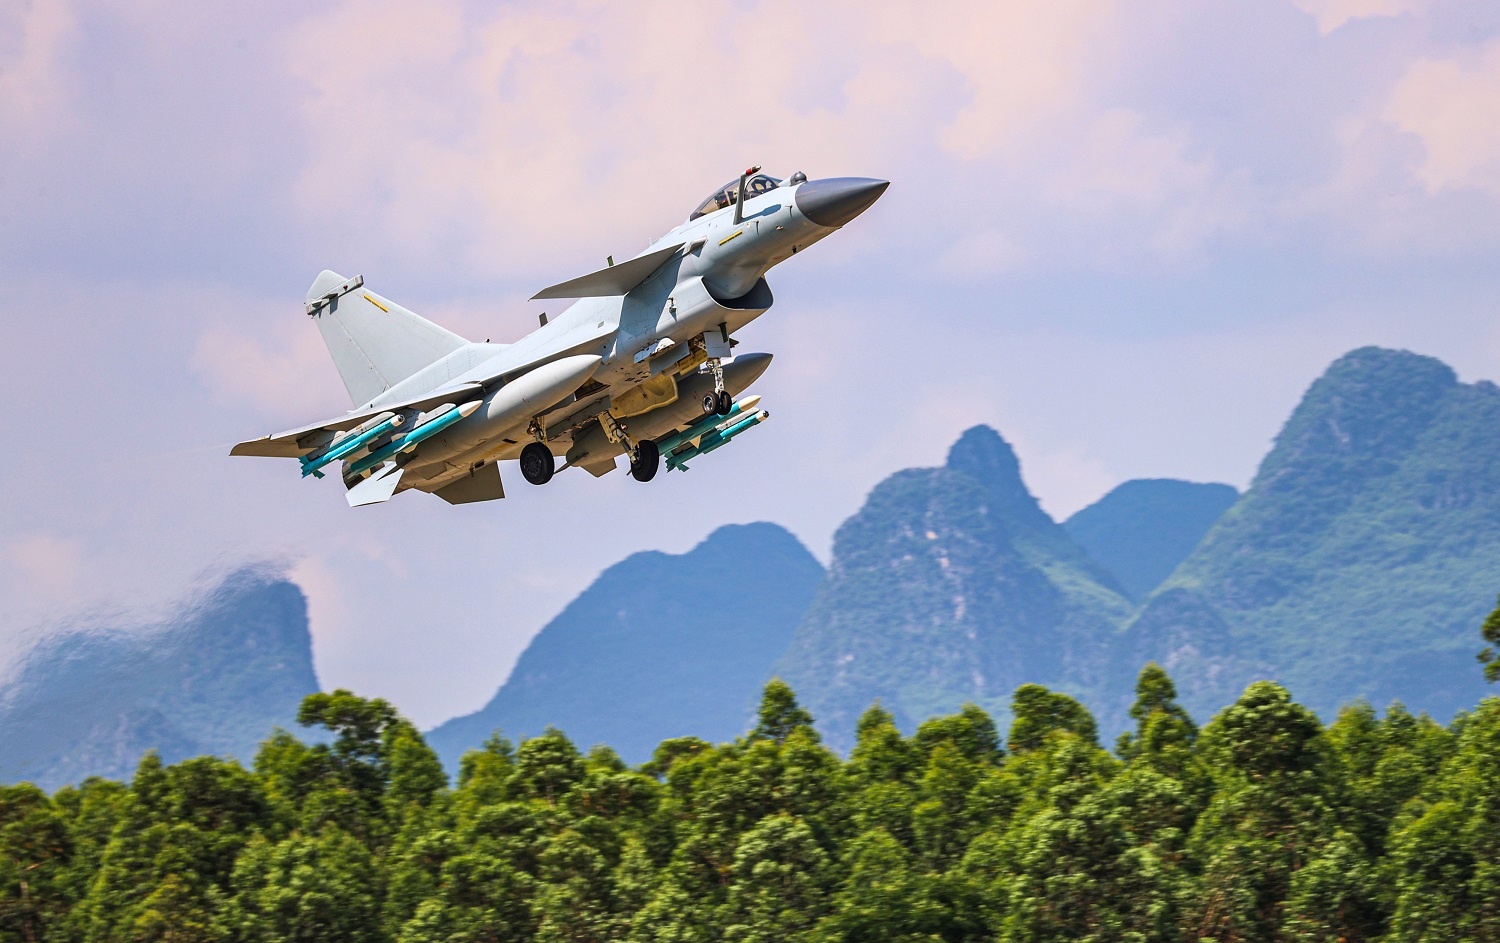 China's PLA Chengdu J-10 single-engine multirole fighter